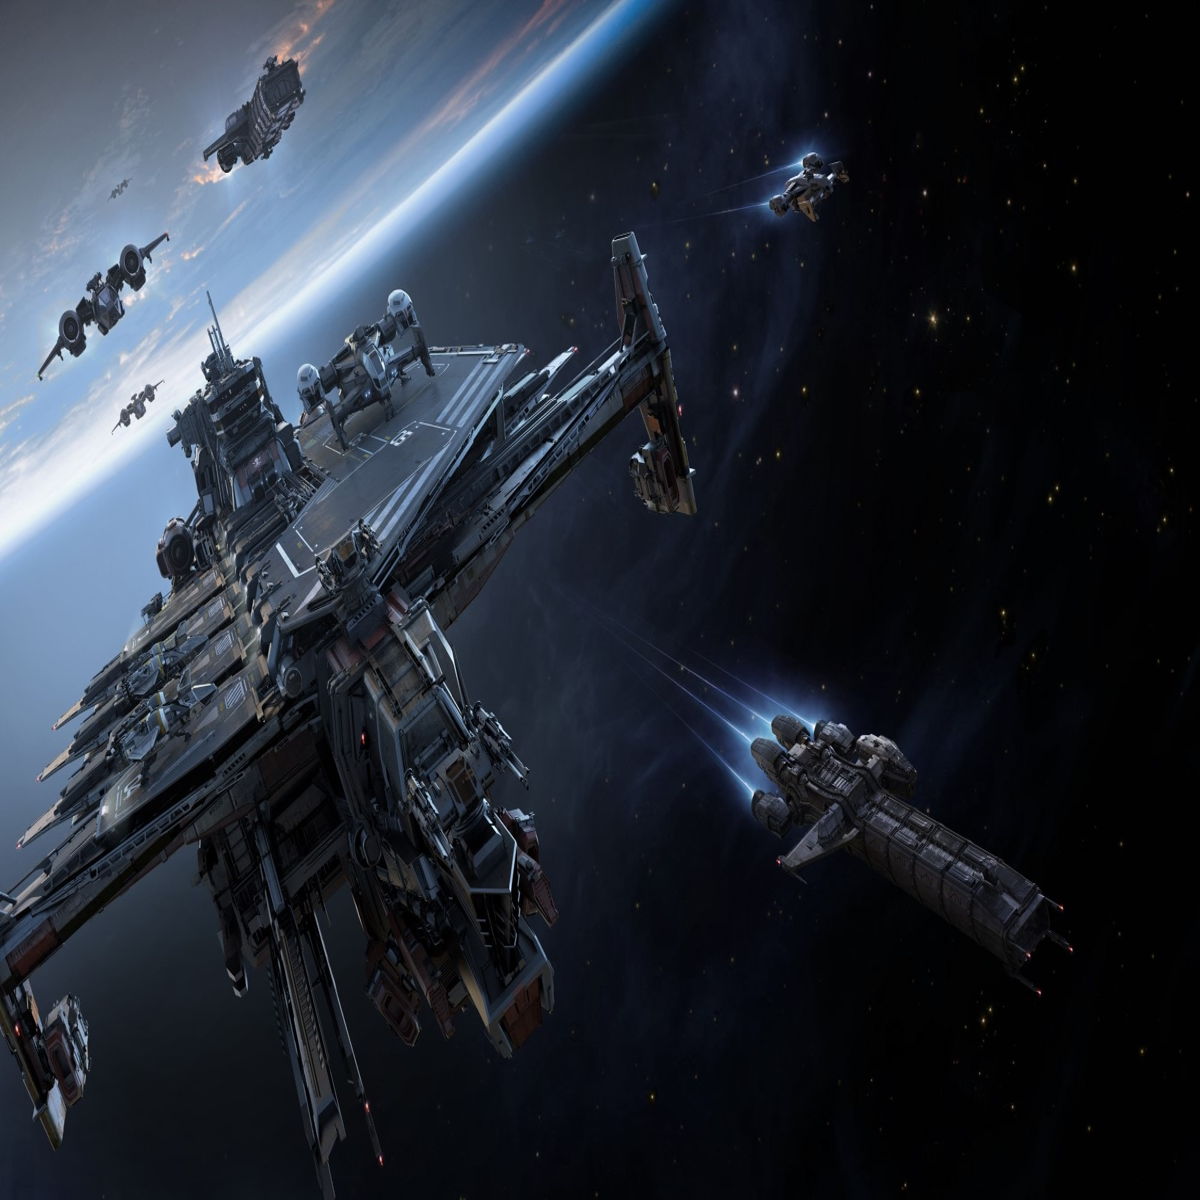 Cloud Imperium Games addresses Star Citizen concerns